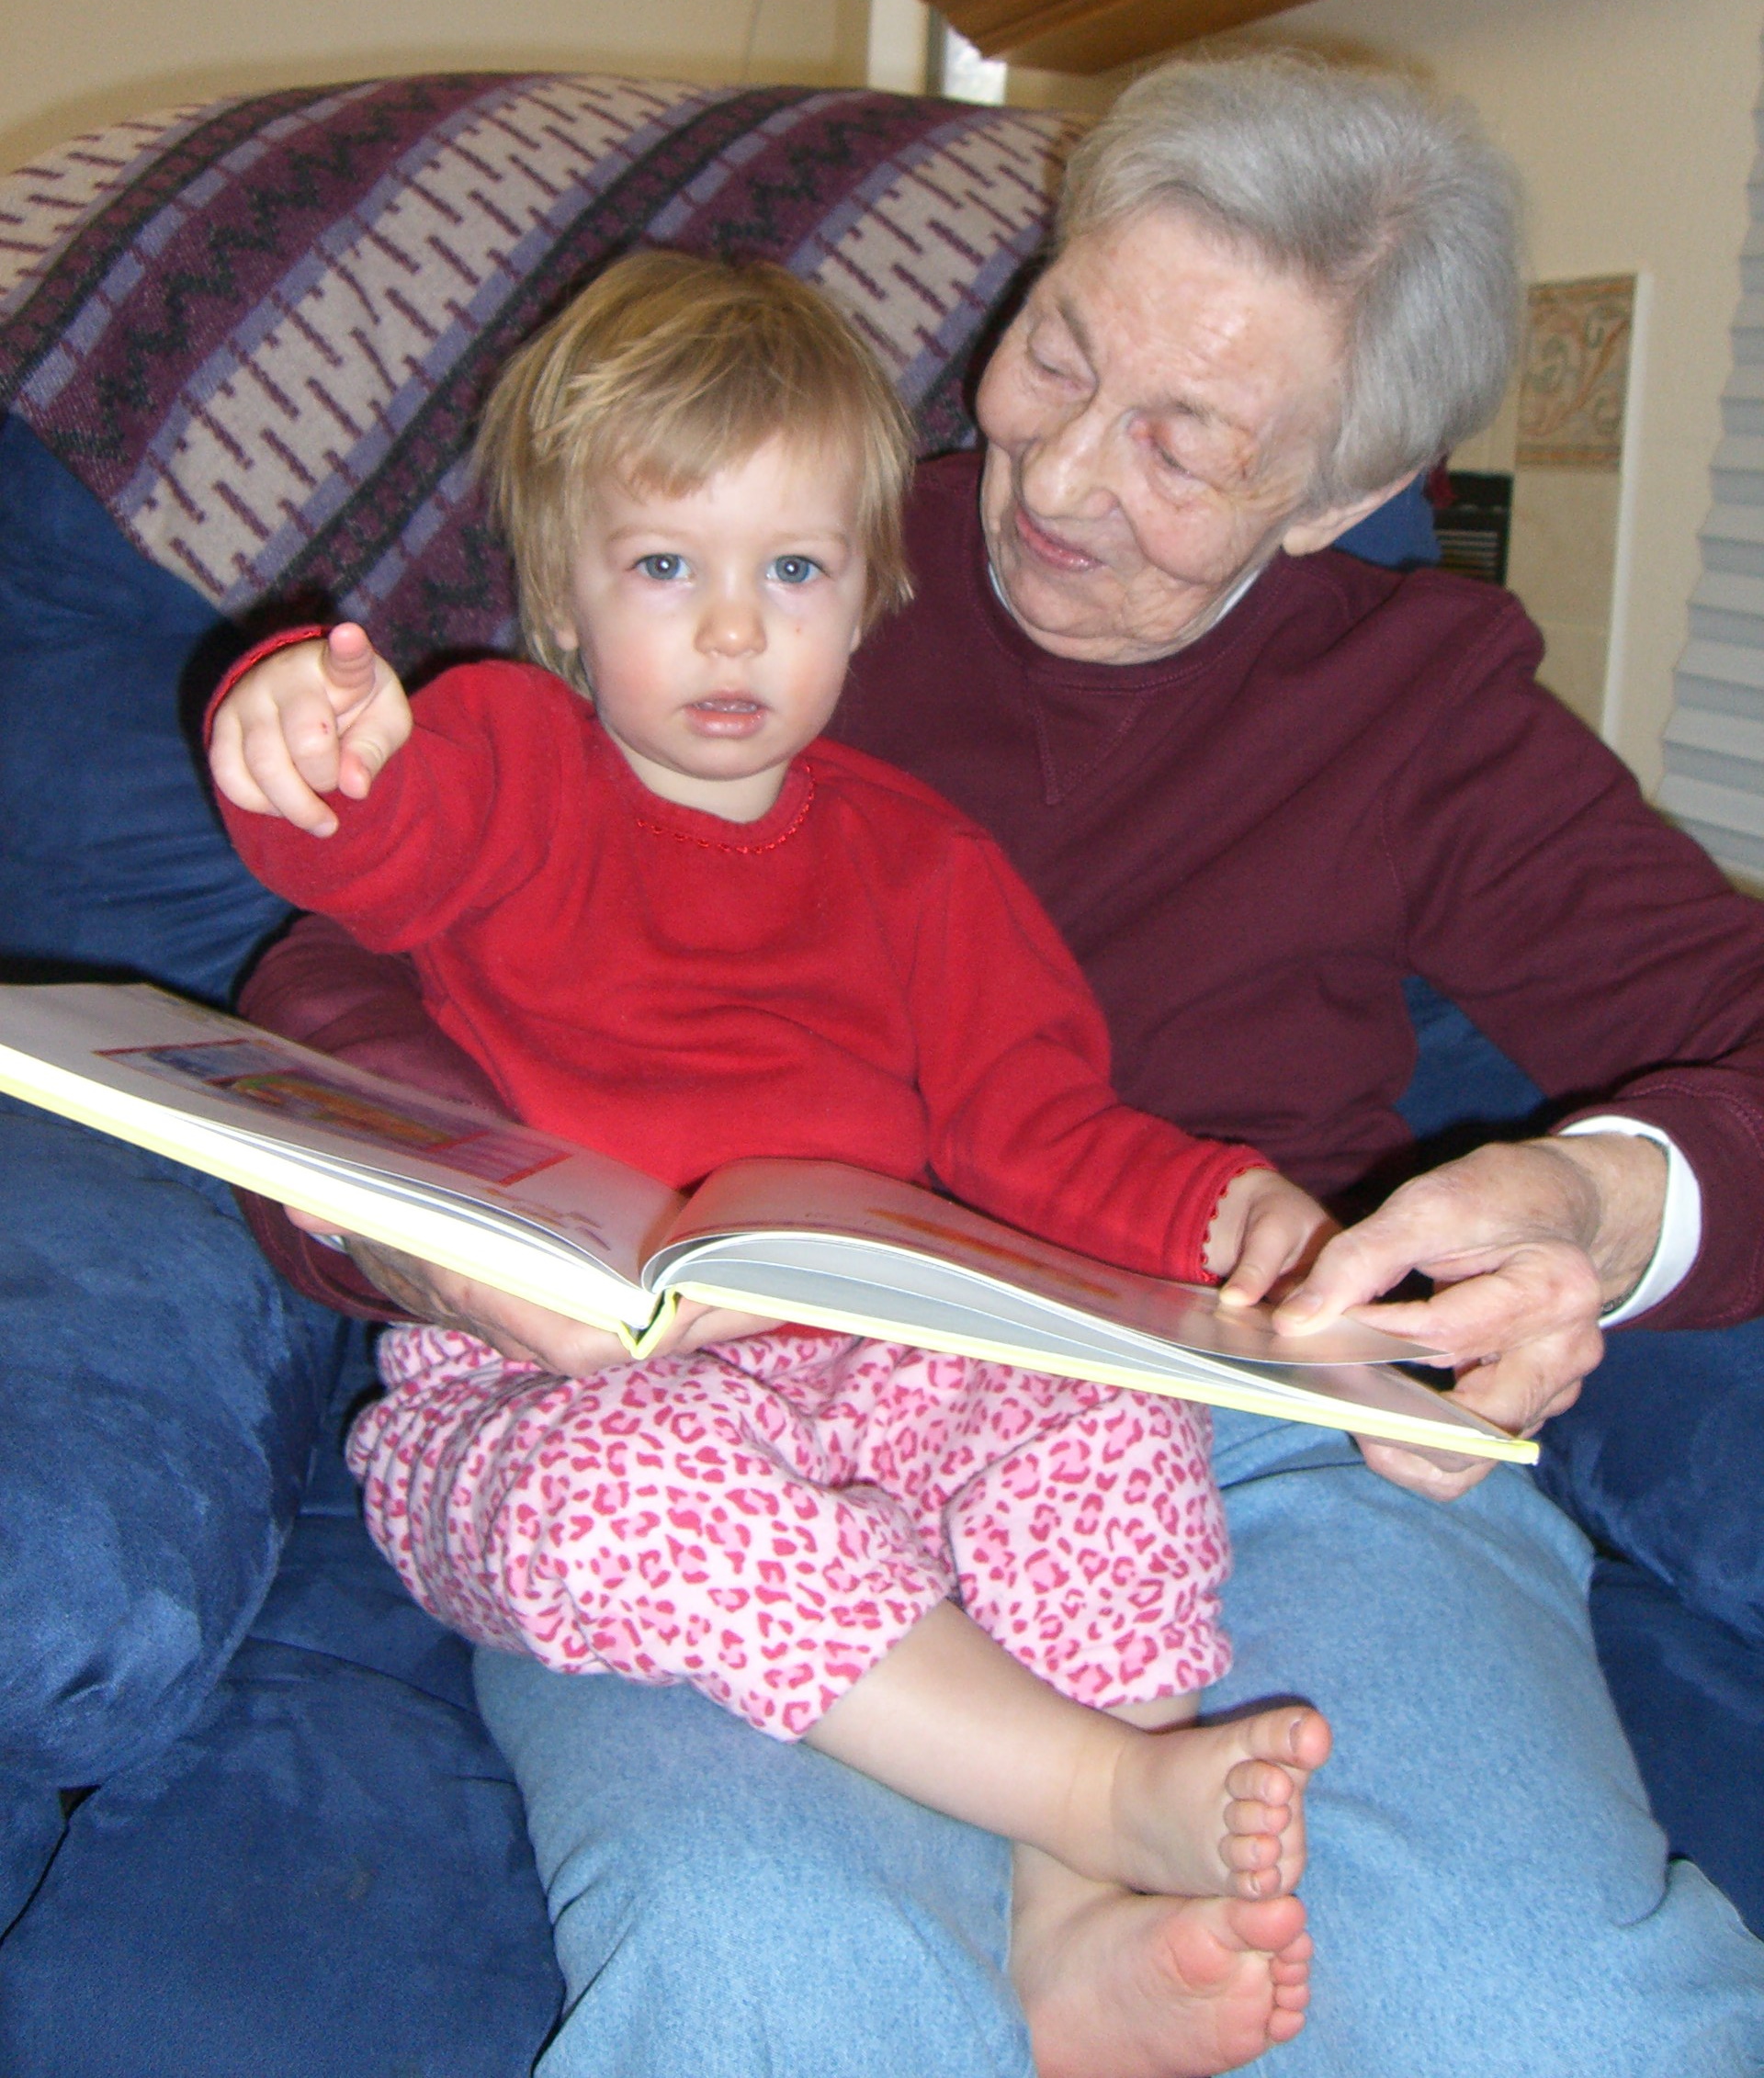 E with grandma and a book